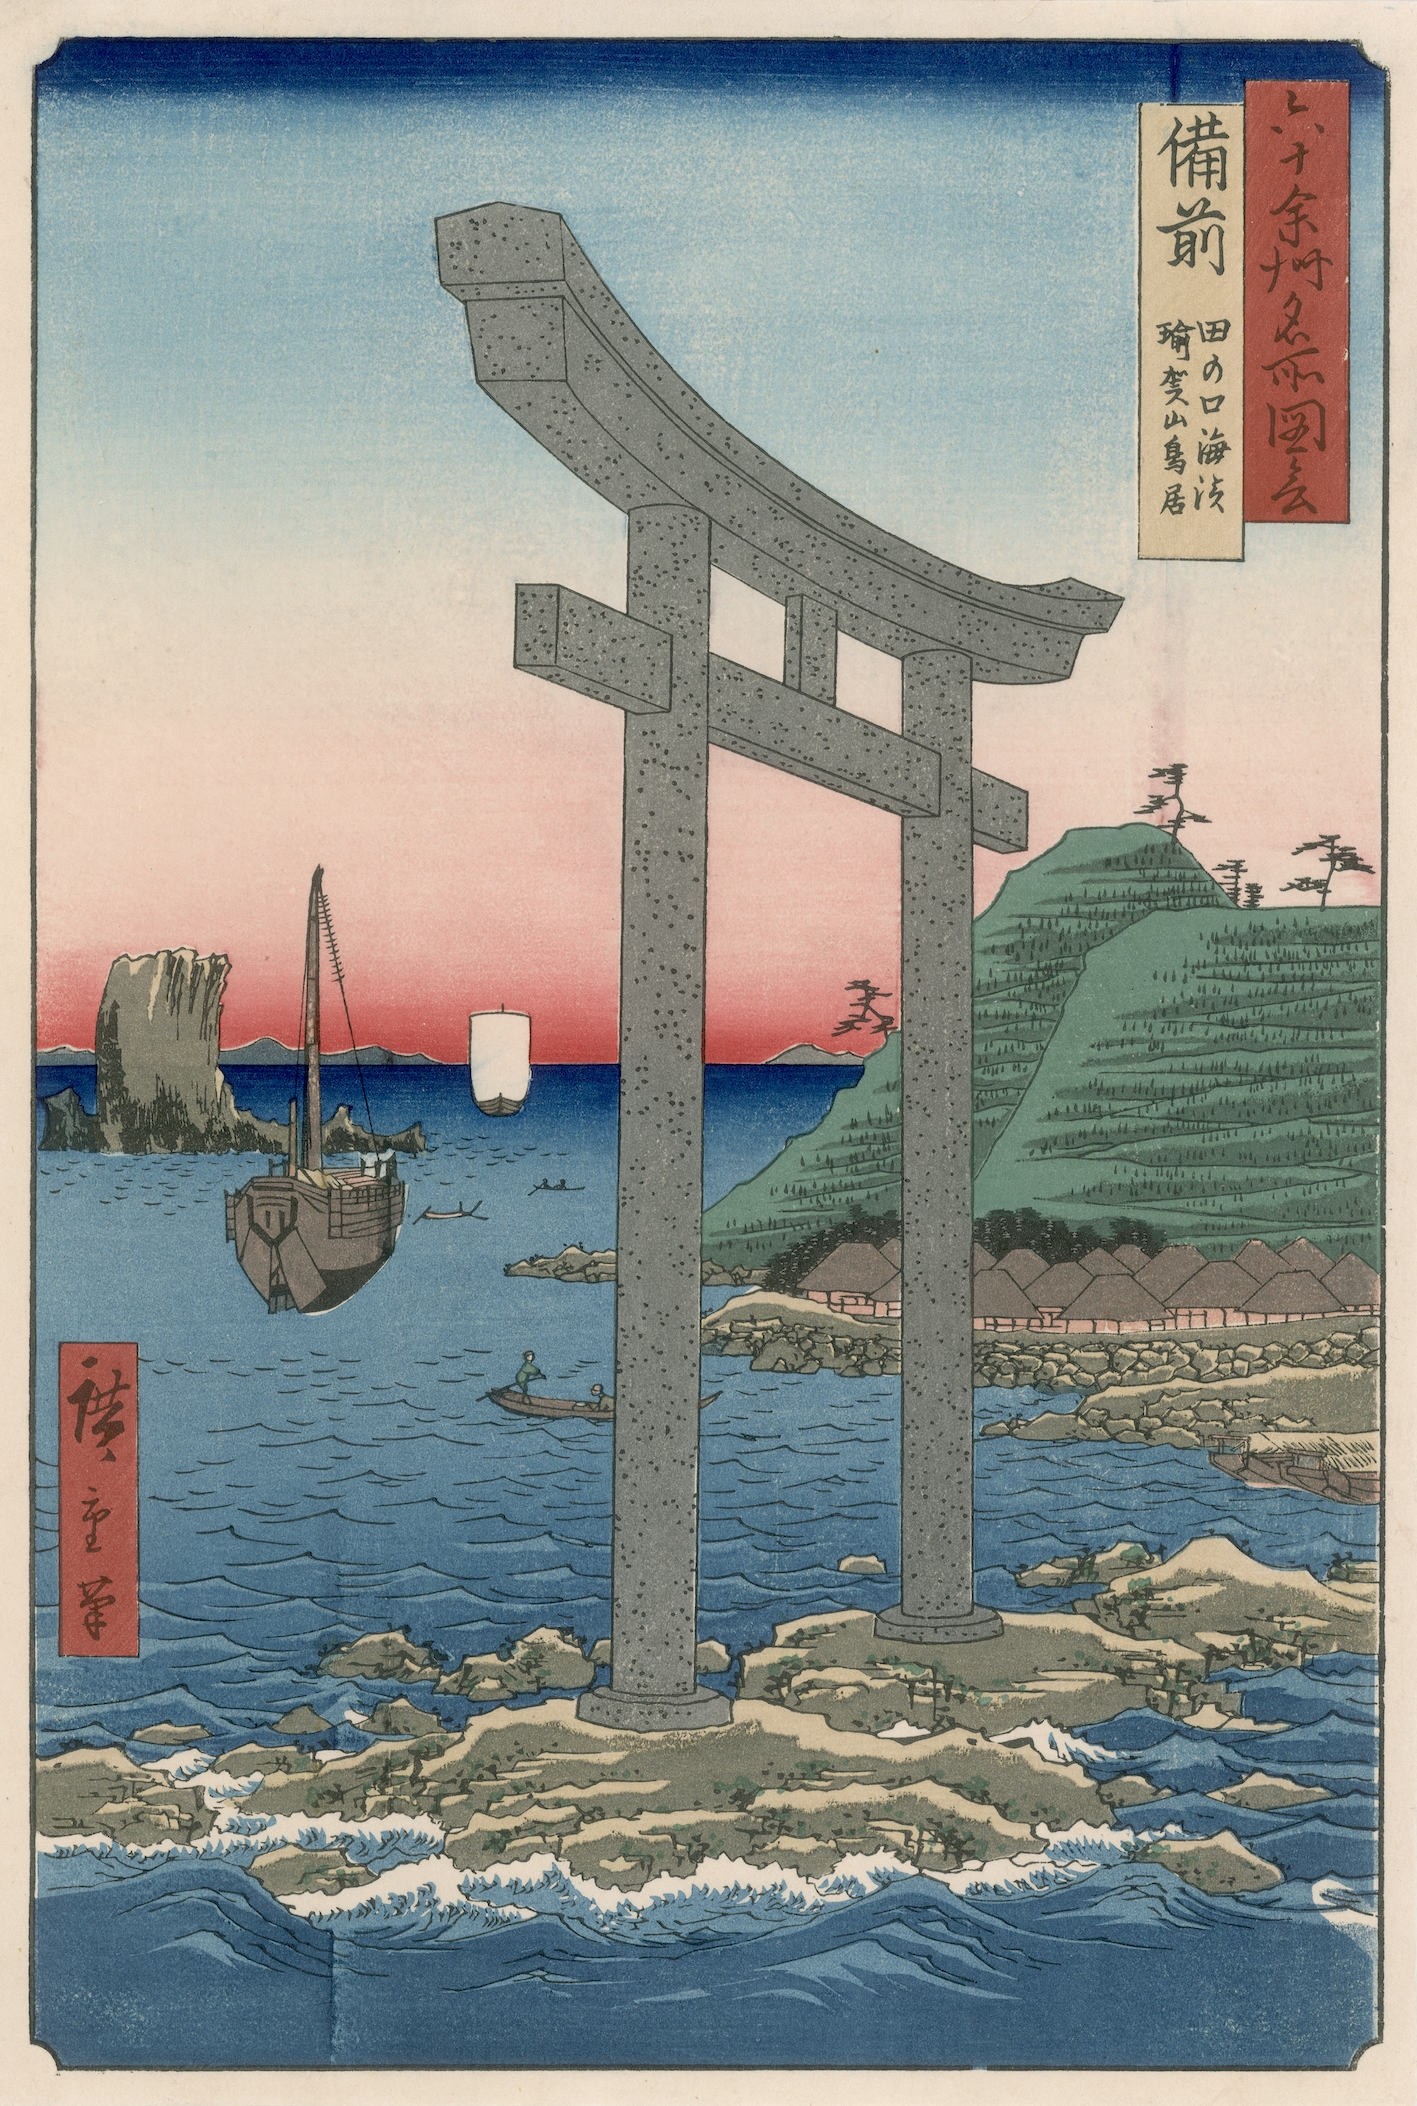 Tori Gate at Bizen Province Japanese Woodblock Print Ukiyo-e A4 Photo Print on a Mount